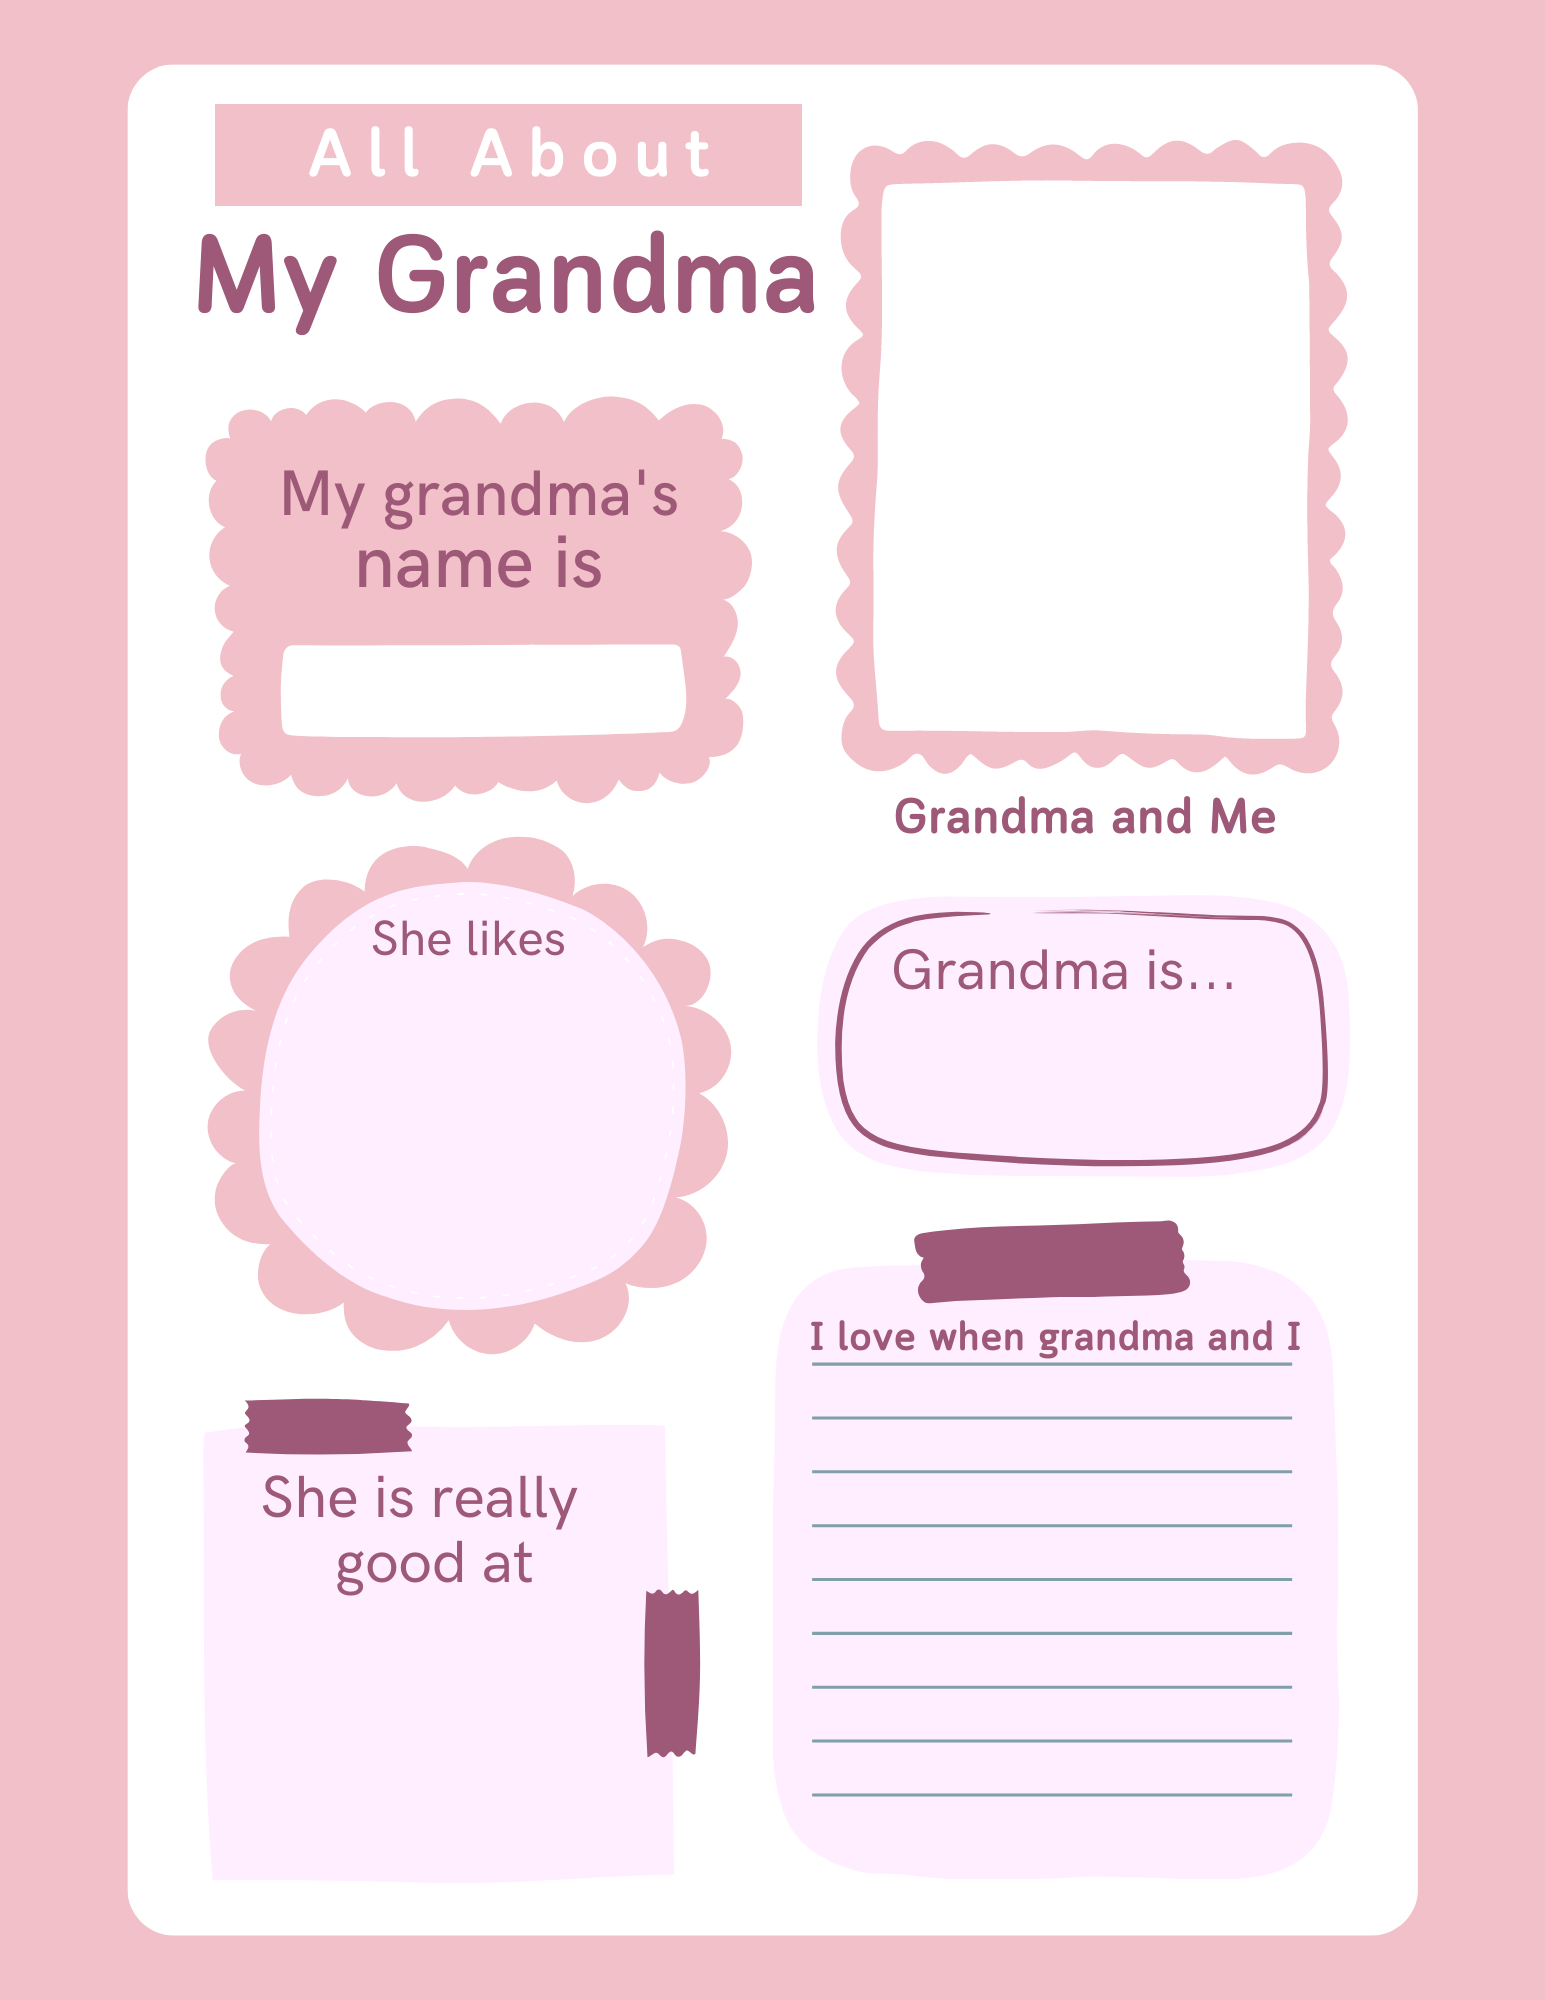 Free Printable Grandma Questionnaire